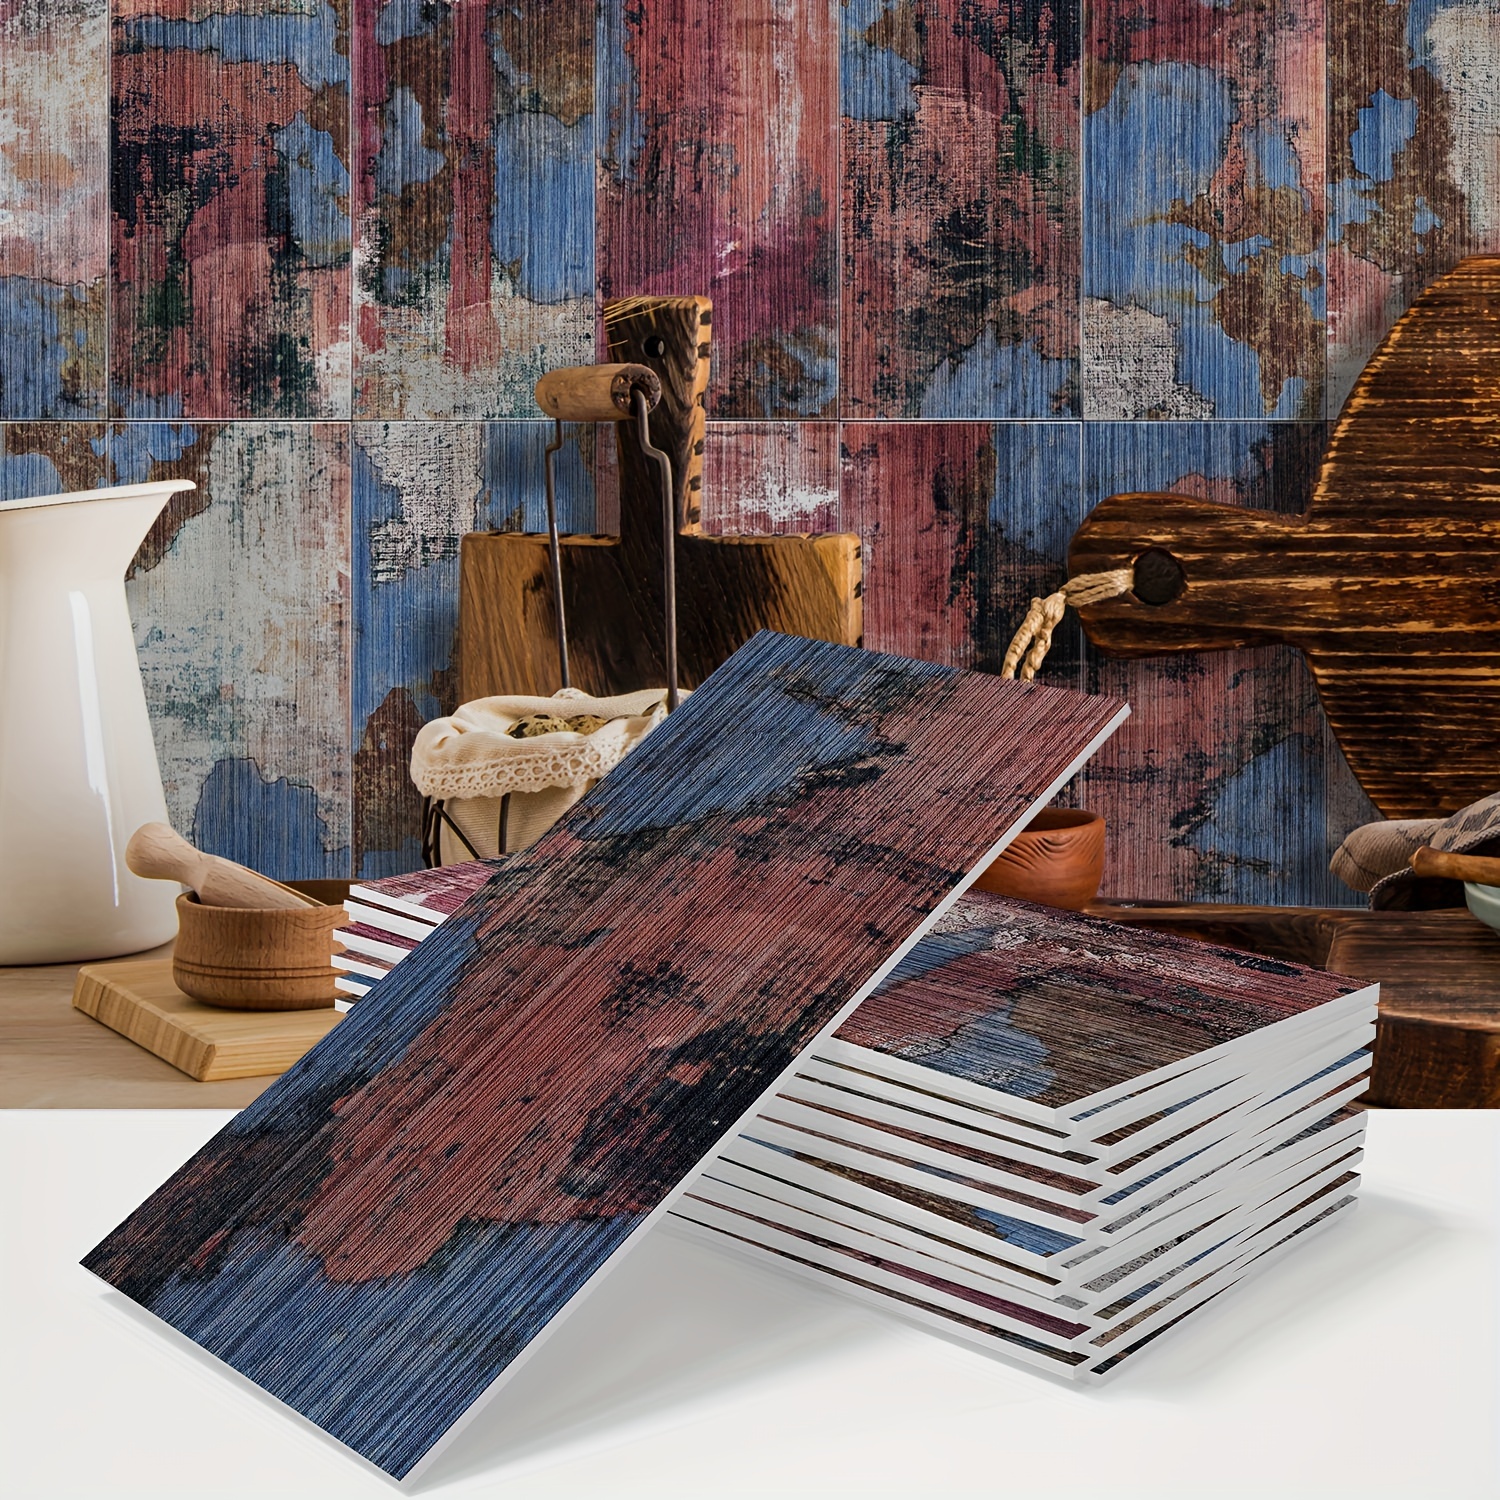 Acústico de madera | Paneles de chapa de pared de madera, 24 x 24 pulgadas  cada uno, paneles insonorizados, decoración de absorción de sonido